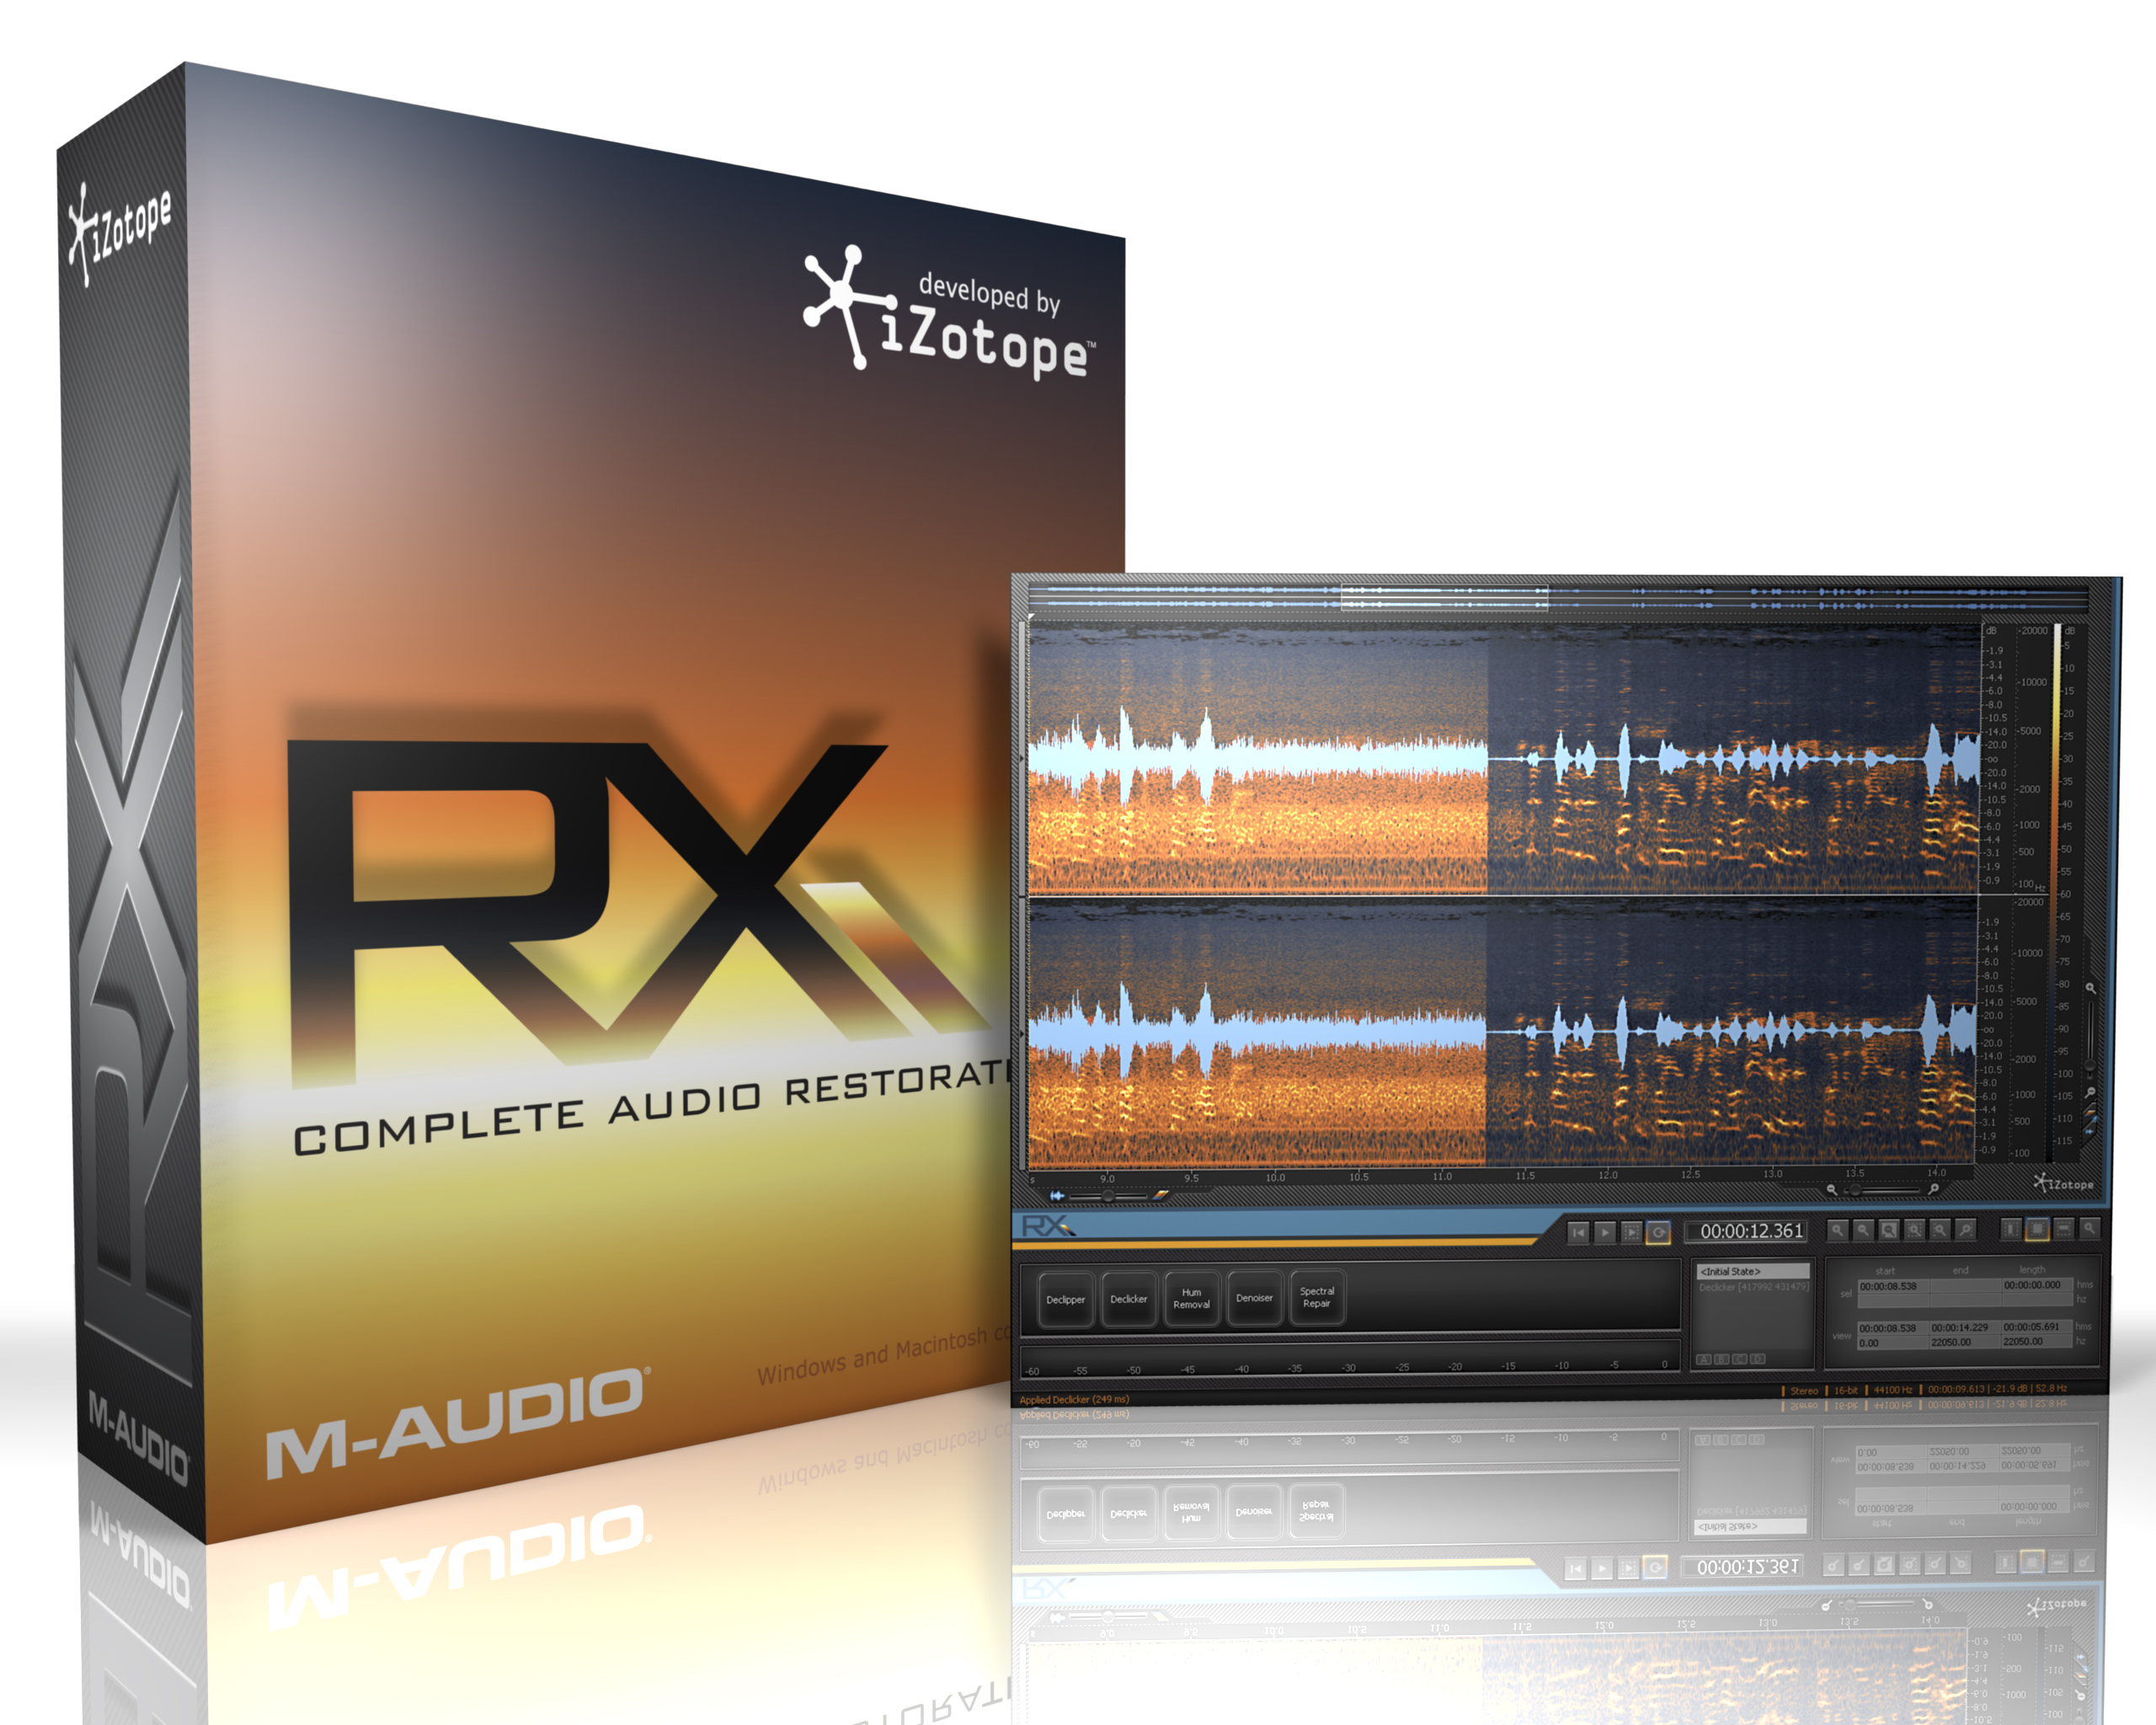 iZotope iZotope RX2 Complete Audio Restoration Software (Mac and Windows)